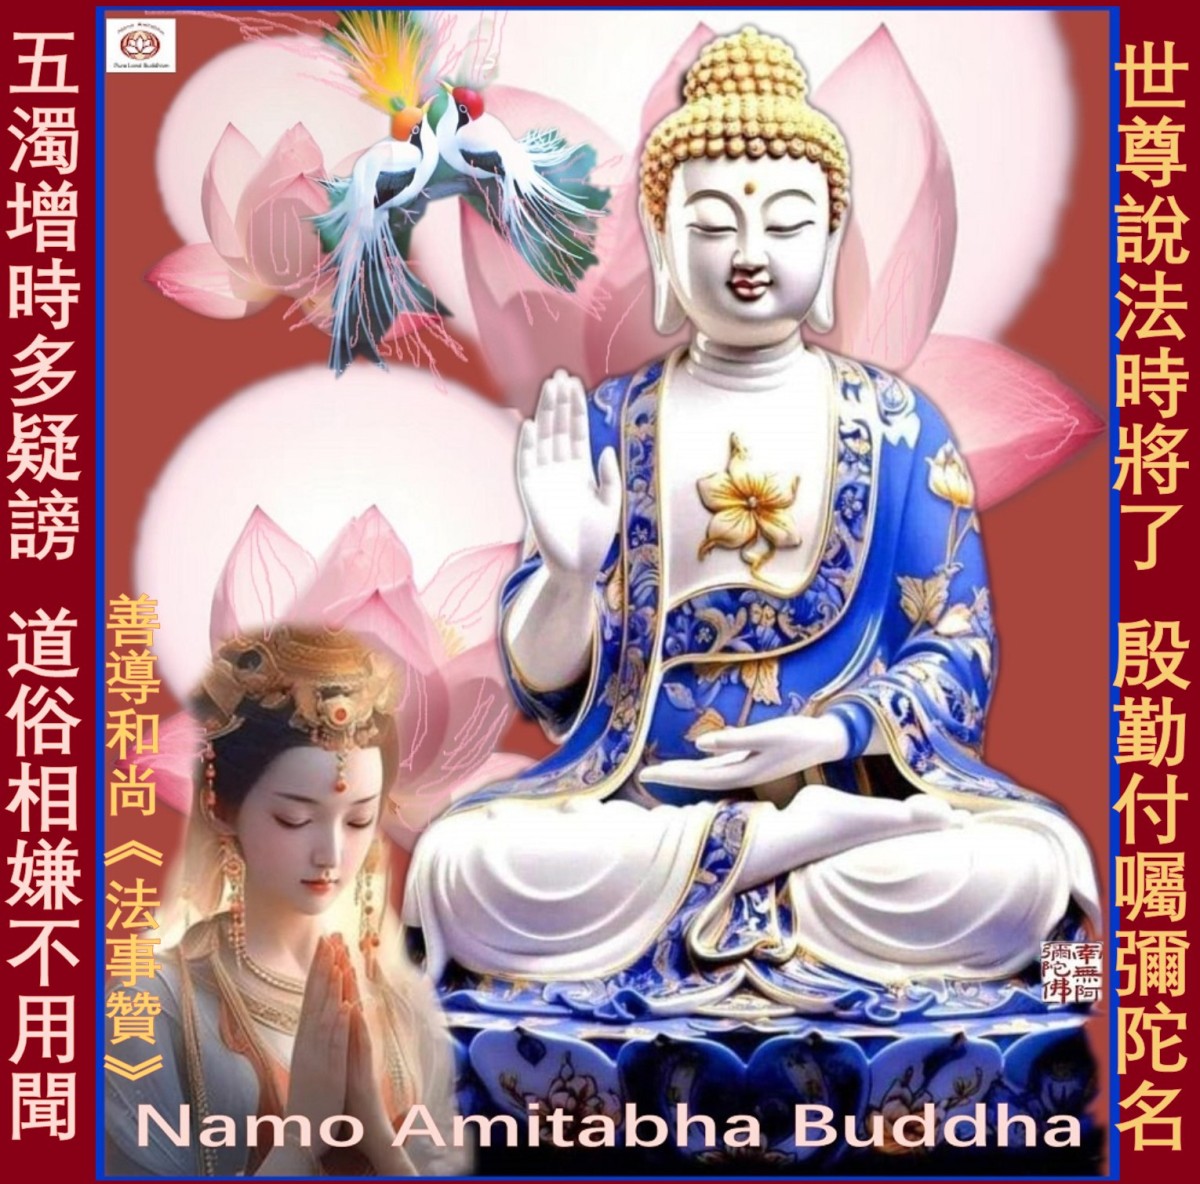 Master Shandao’s Vaccination for the Amitabha Reciters